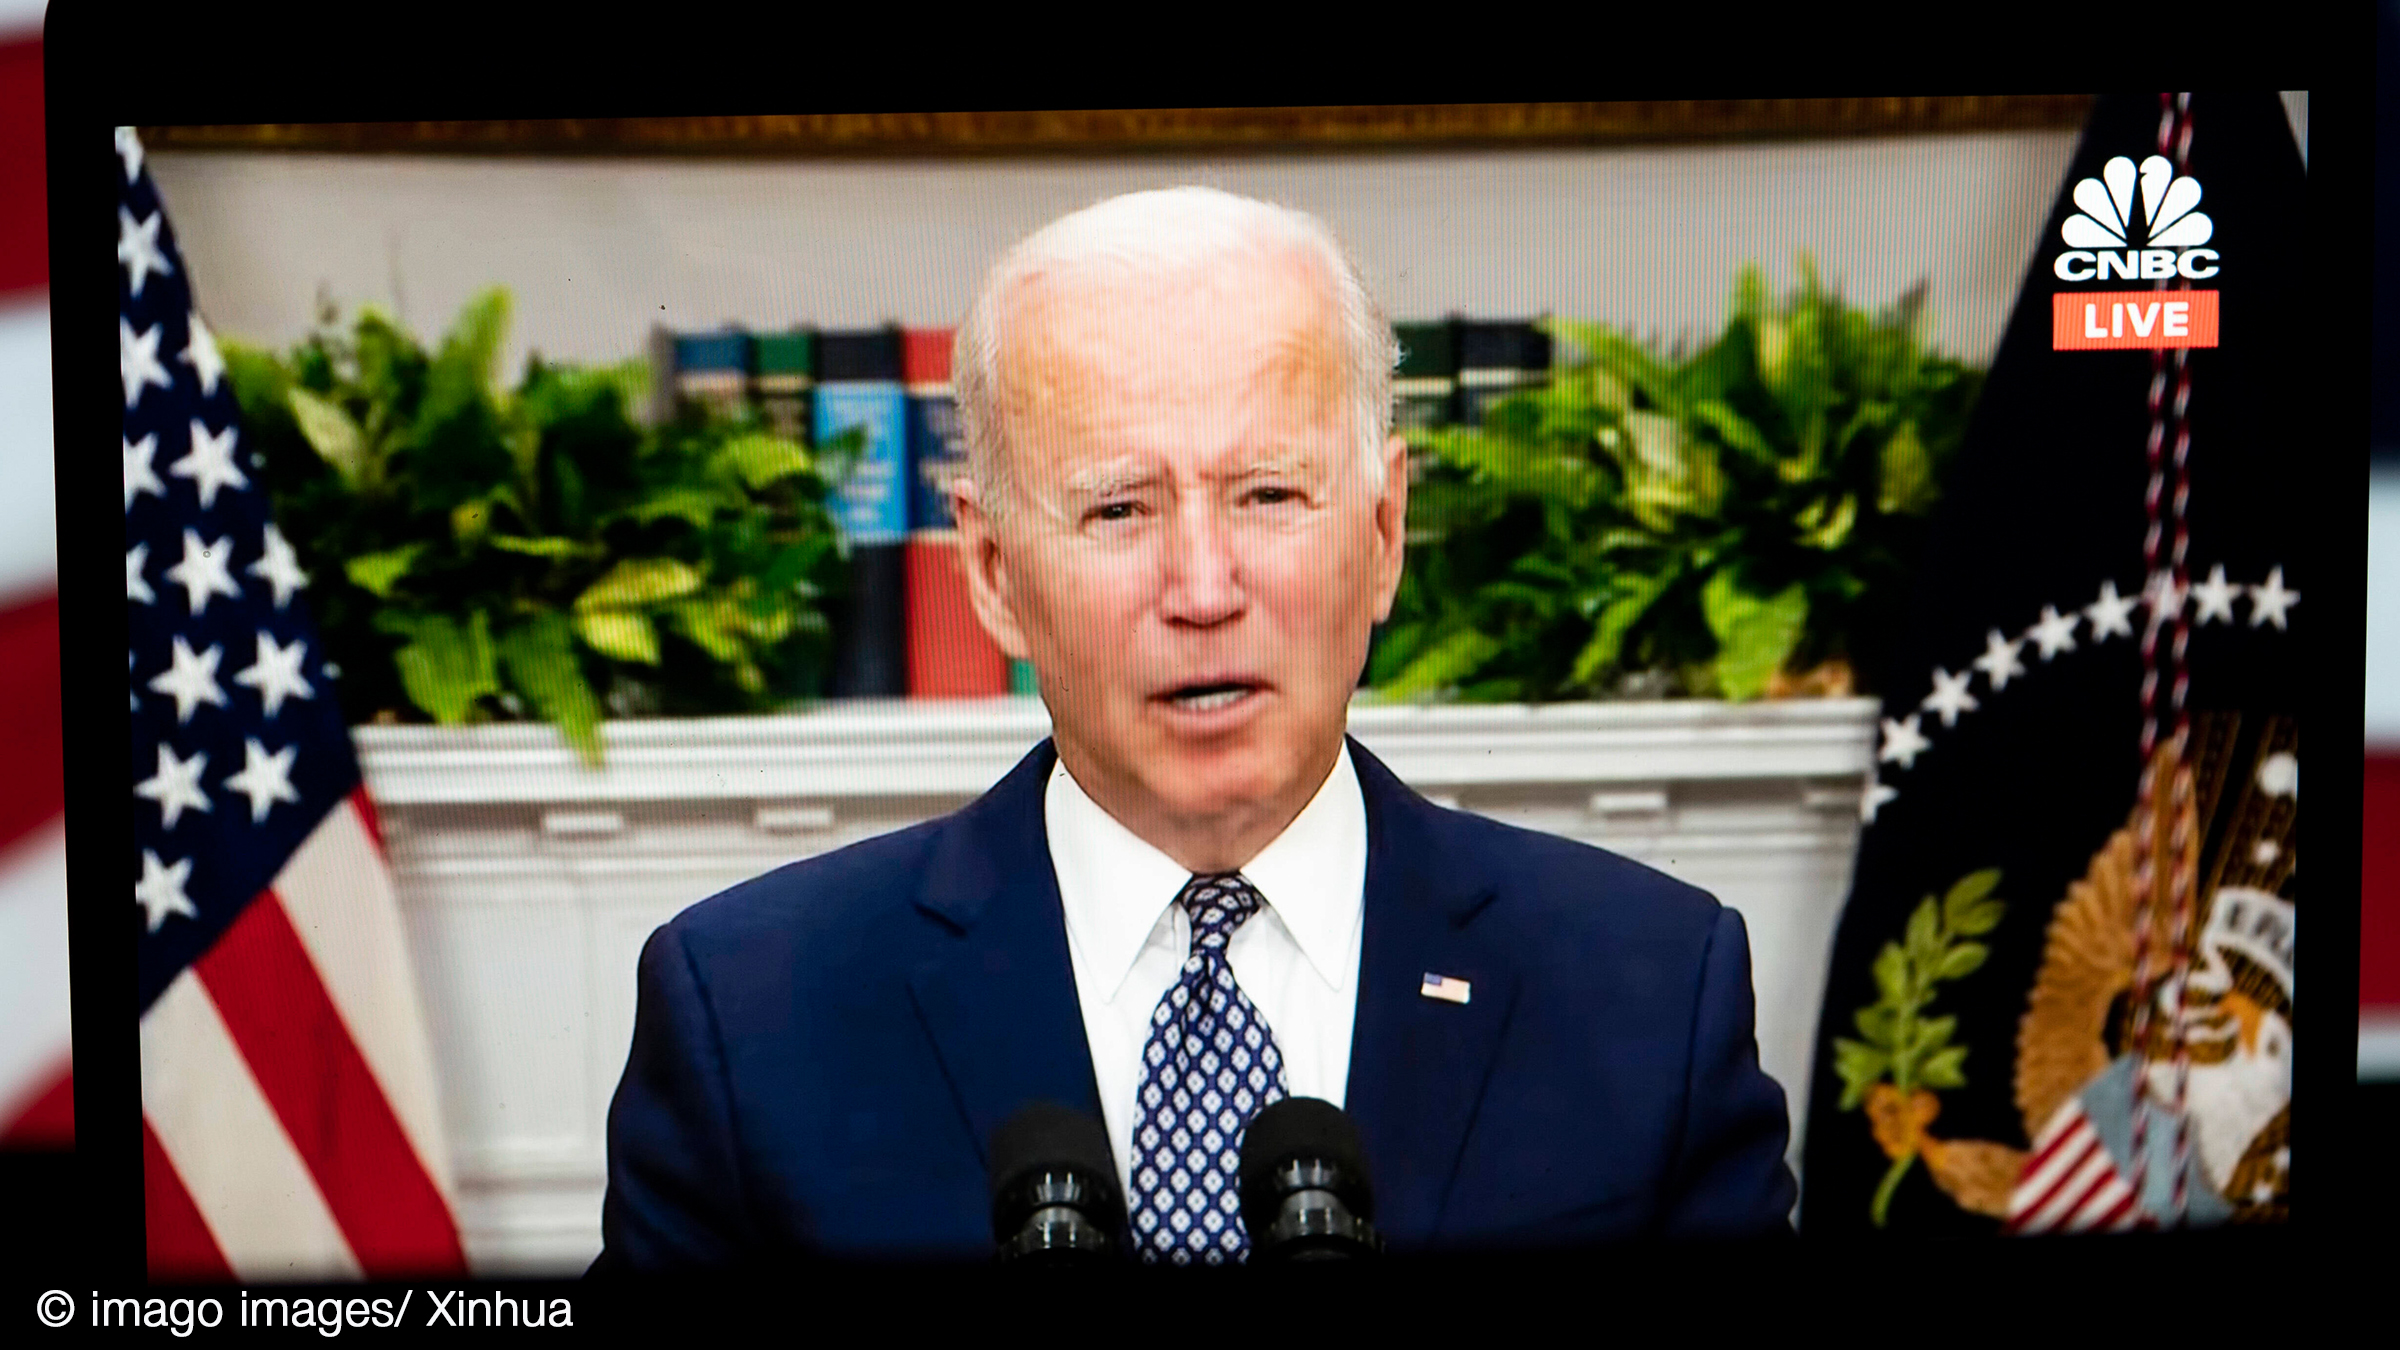 Bildschirmfoto zeigt den amerikanischen Präsidenten Joe Biden